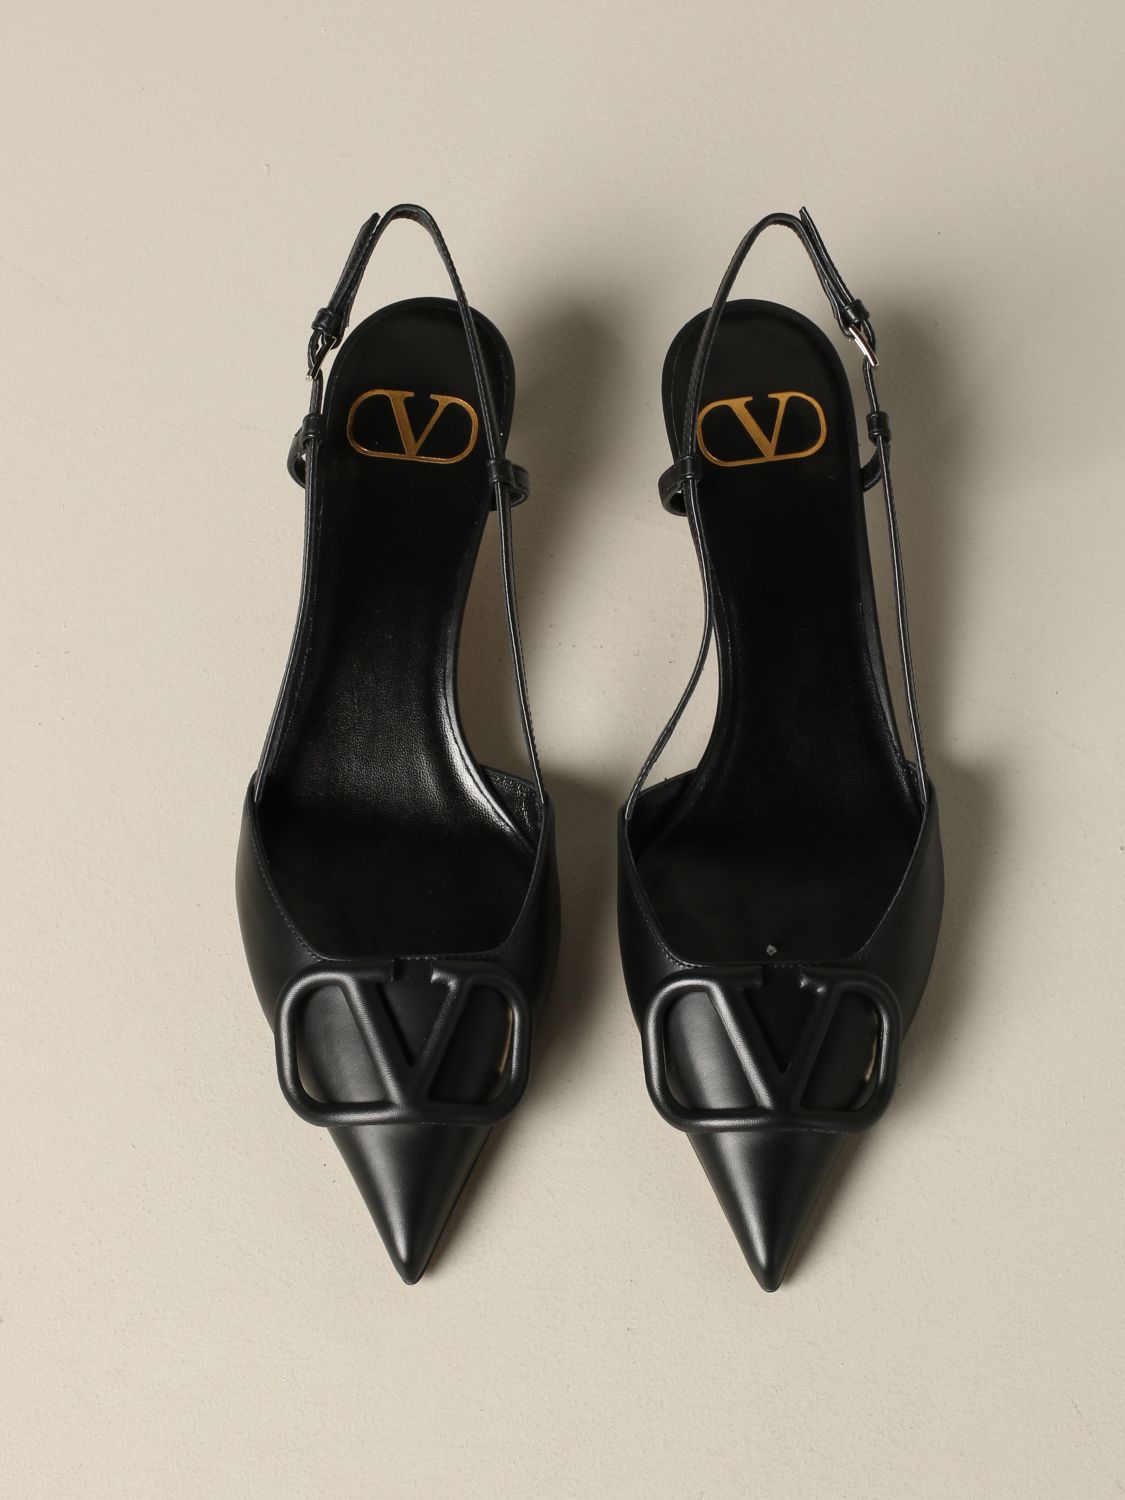 Valentino Garavani Outlet: court shoes for women - Black | Valentino ...